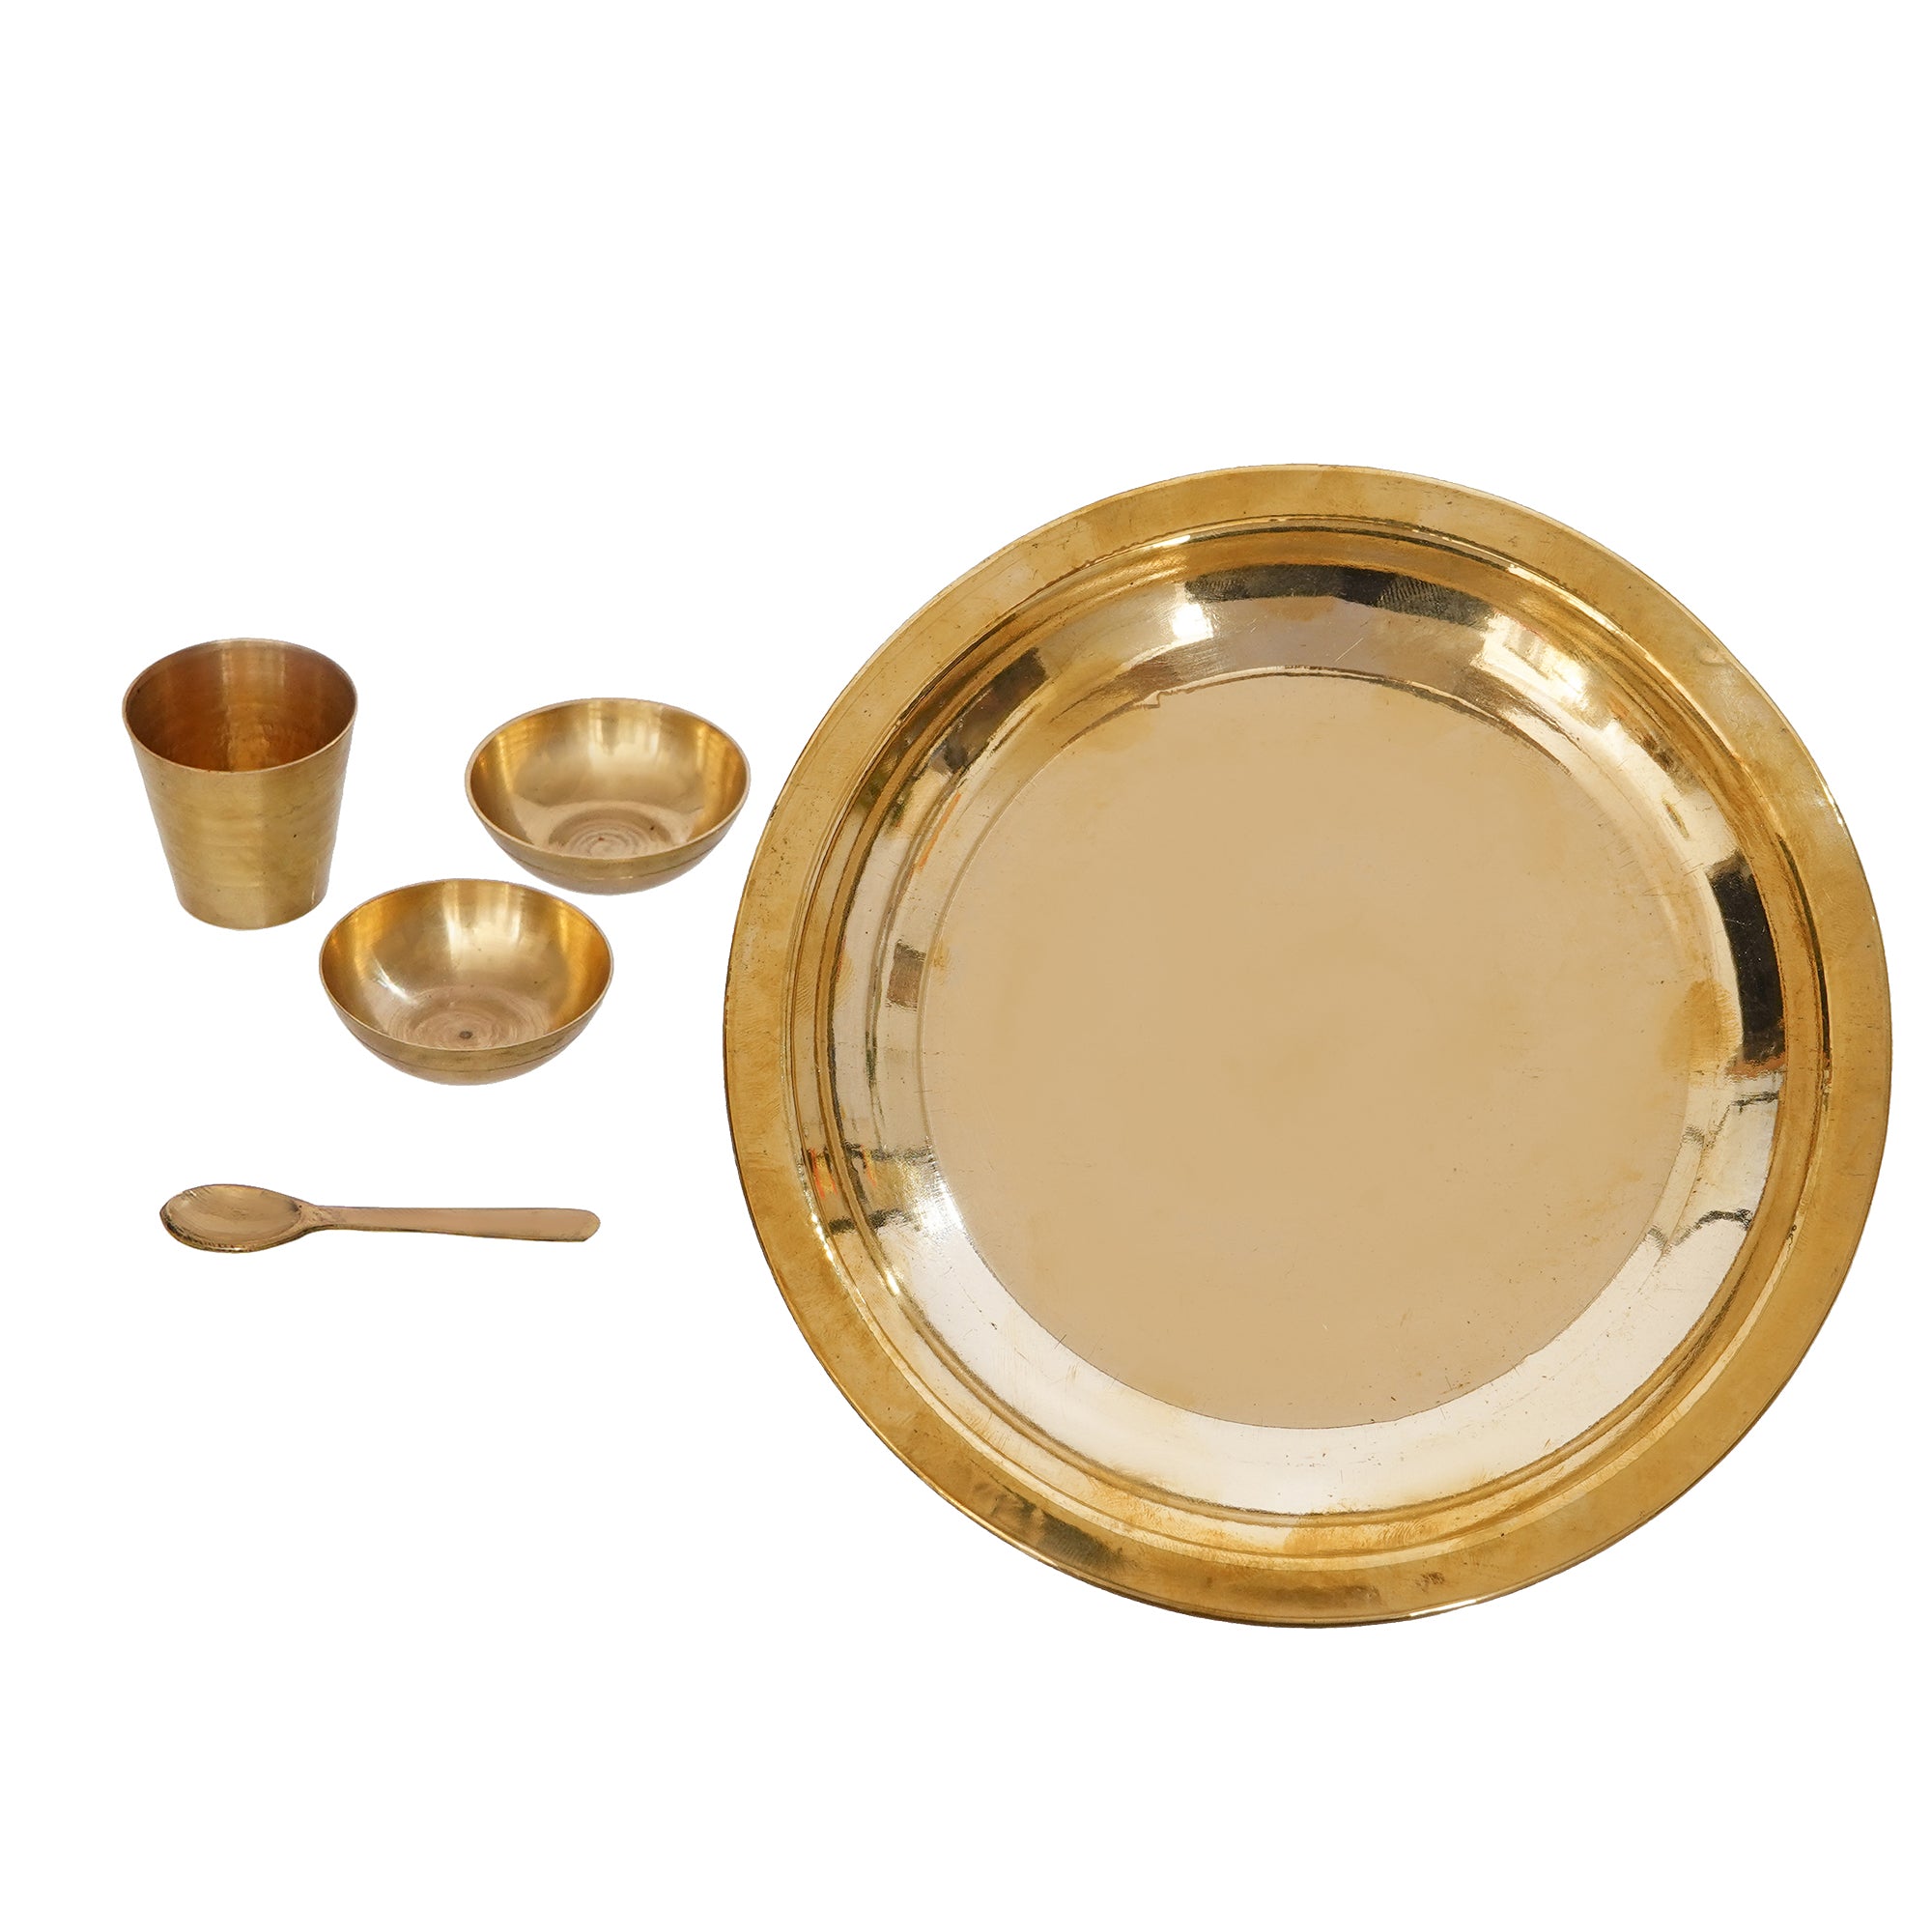 7 Inch Brass Pooja Thali with 2 Katori/Bowls, 1 Spoon and 1 Glass 6